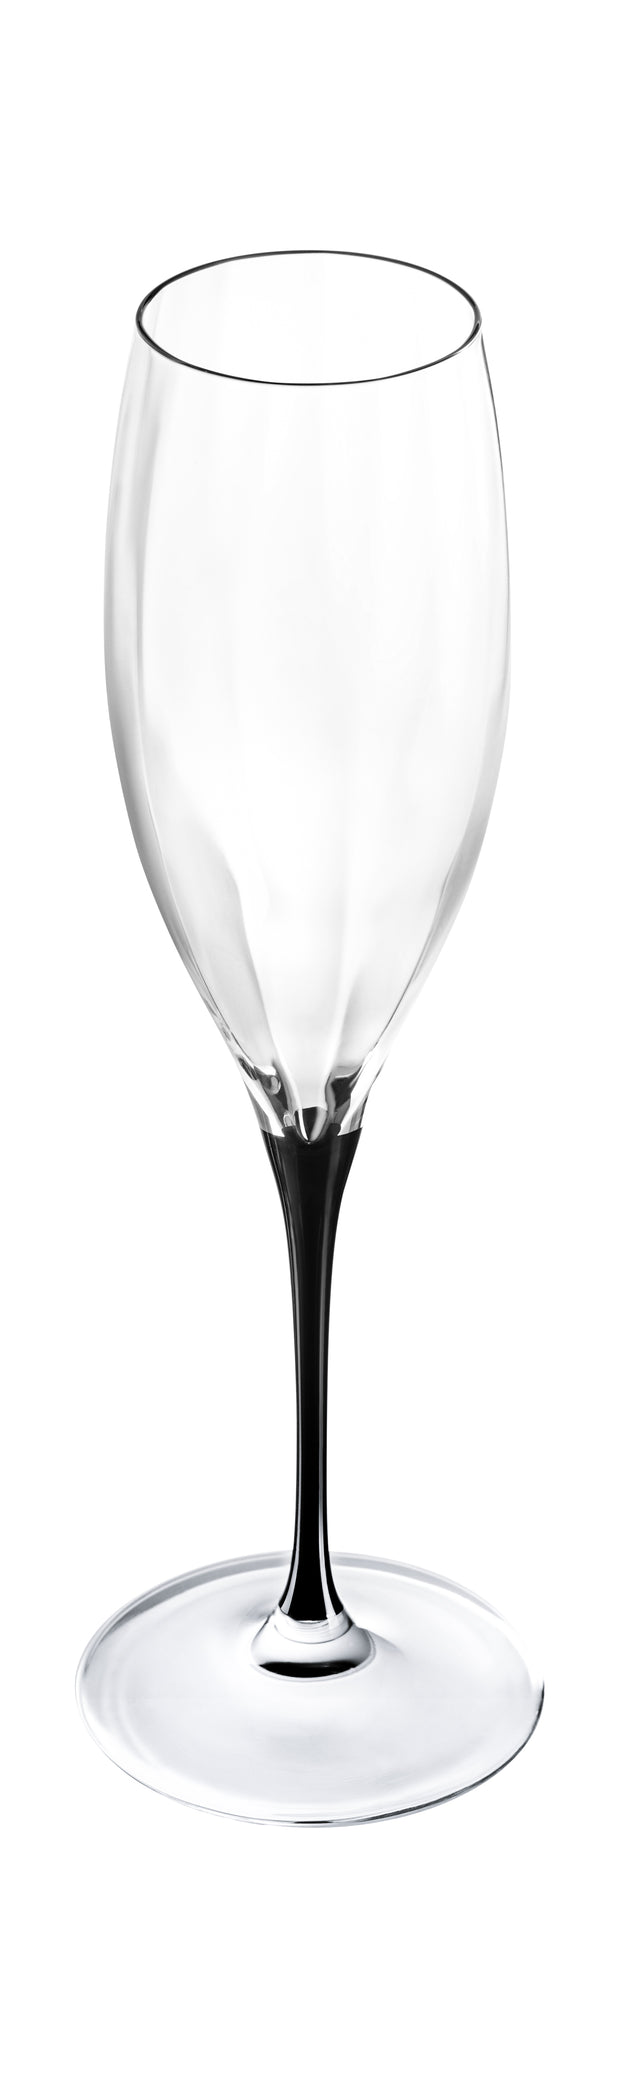 Spectrum Champagne Flute with Black Stem, 11 oz. Set of 6